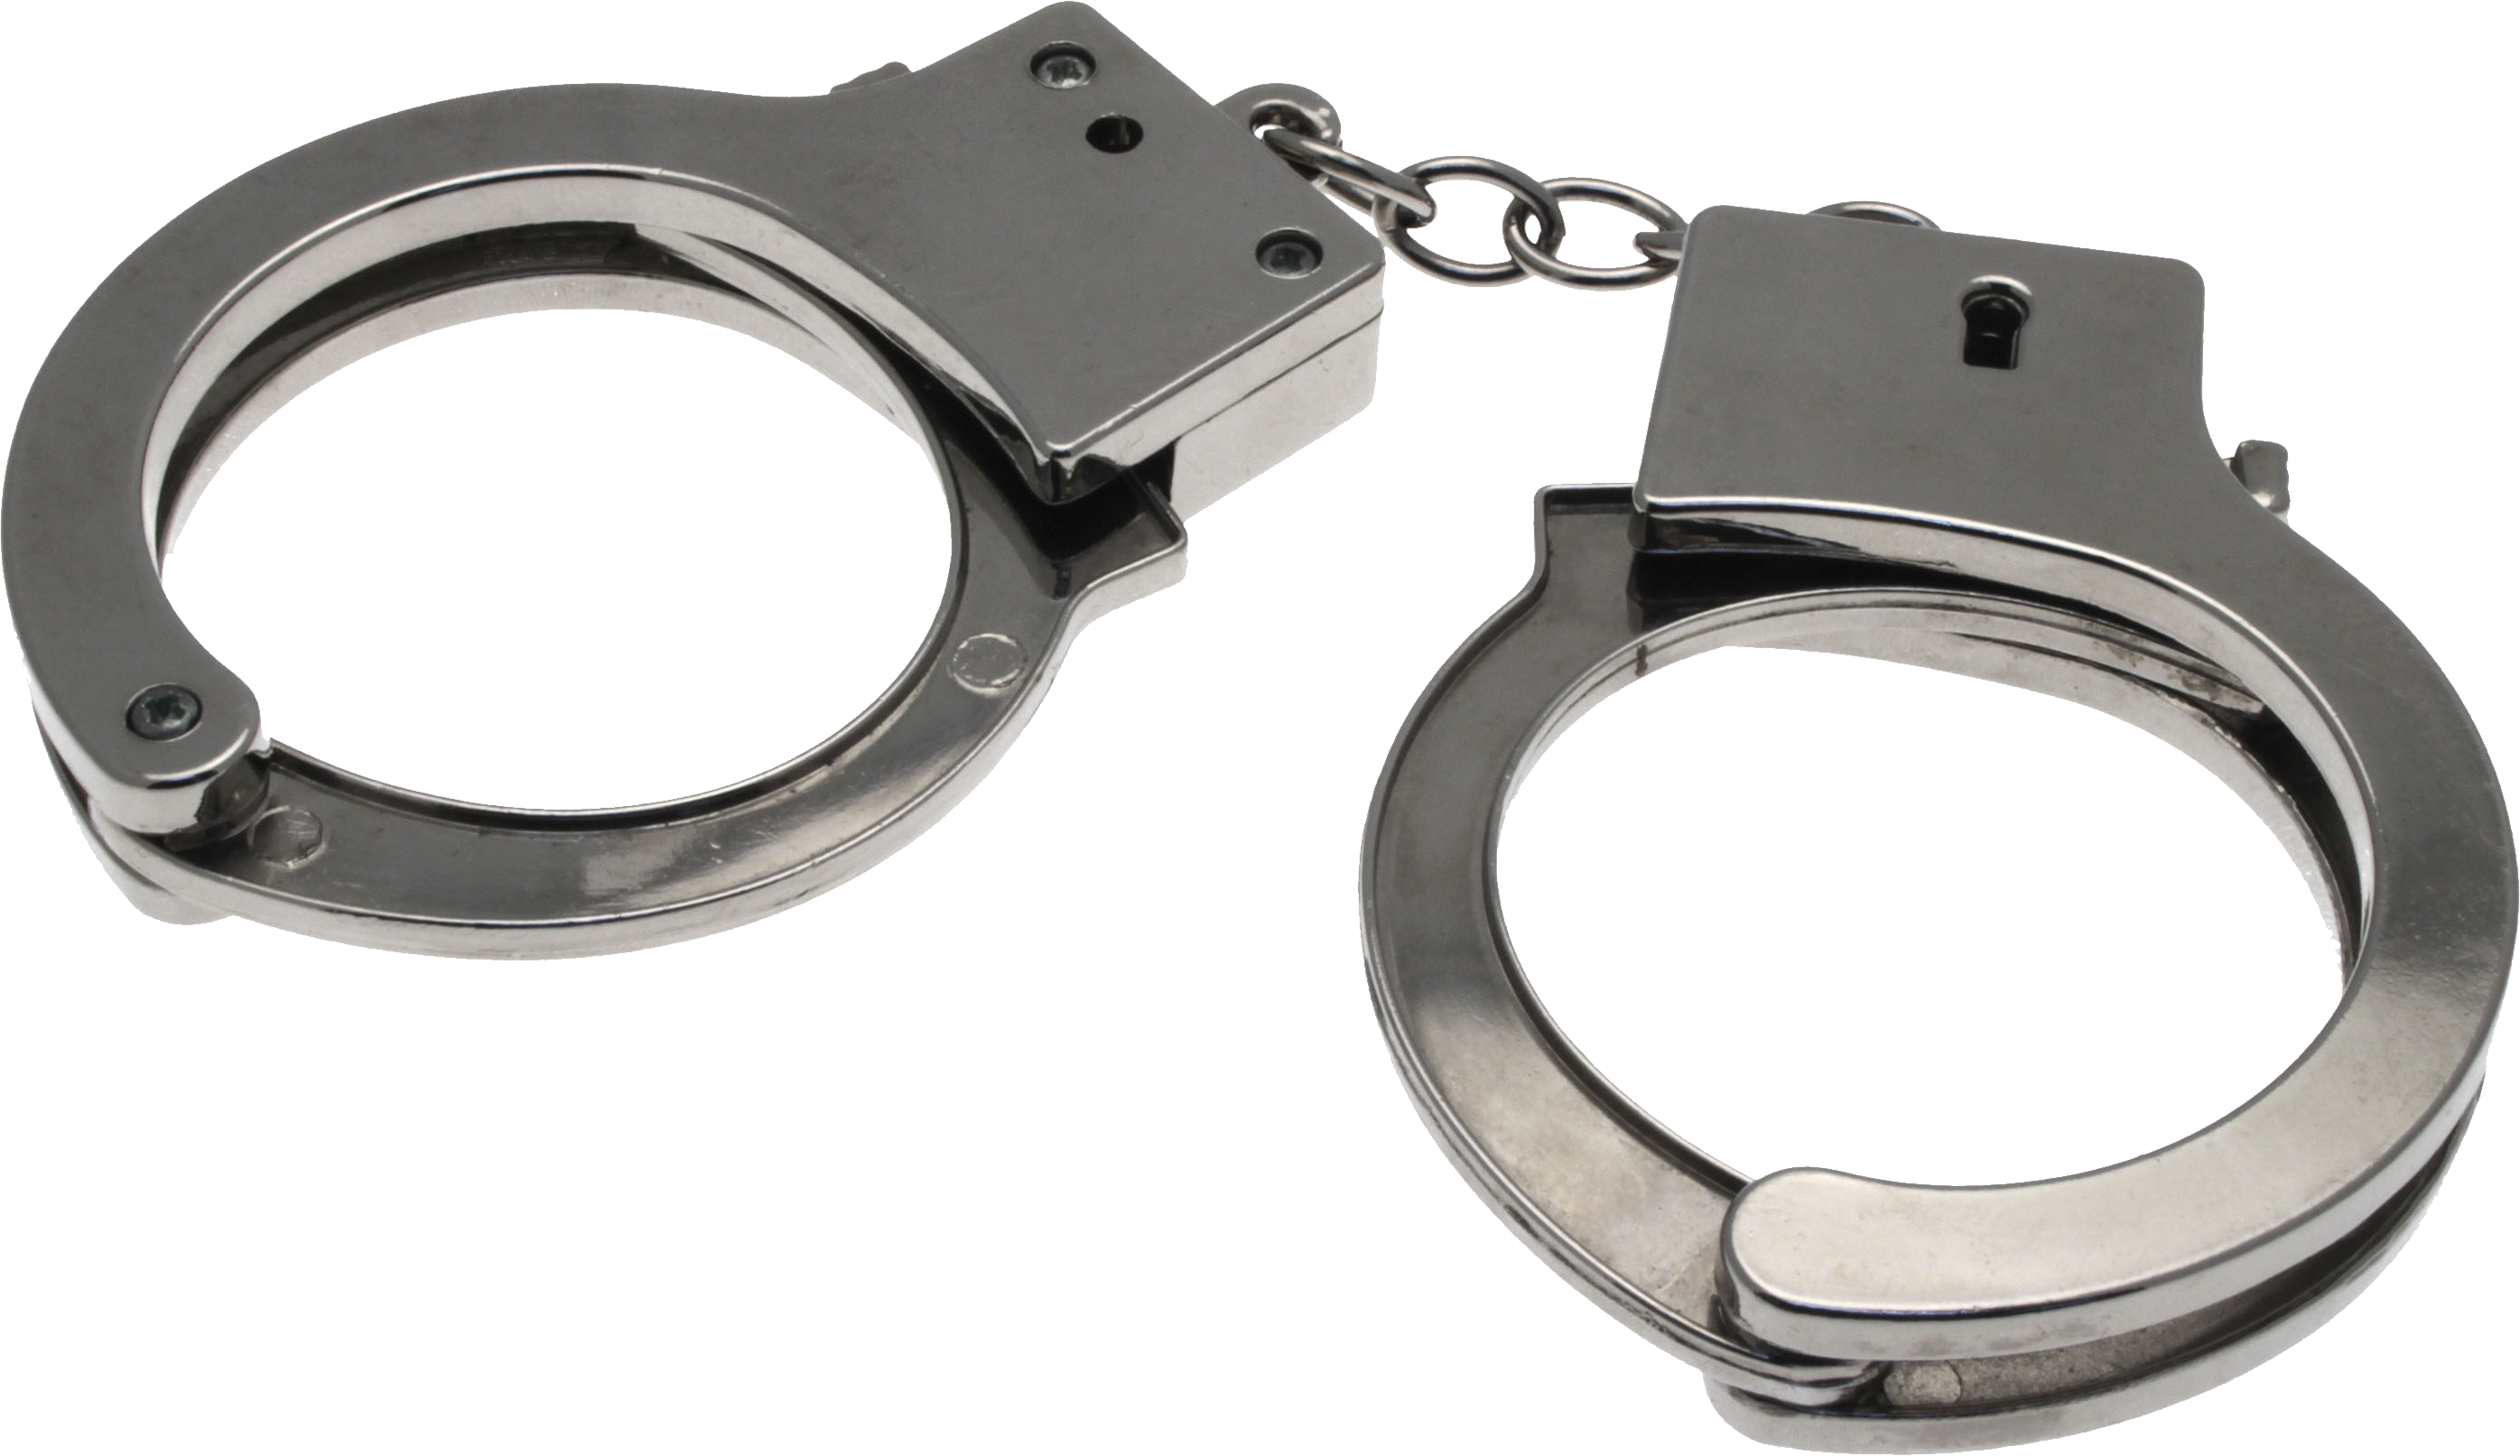 handcuffs clipart accessory, Handcuffs accessory Transparent, Handcuffs acc...